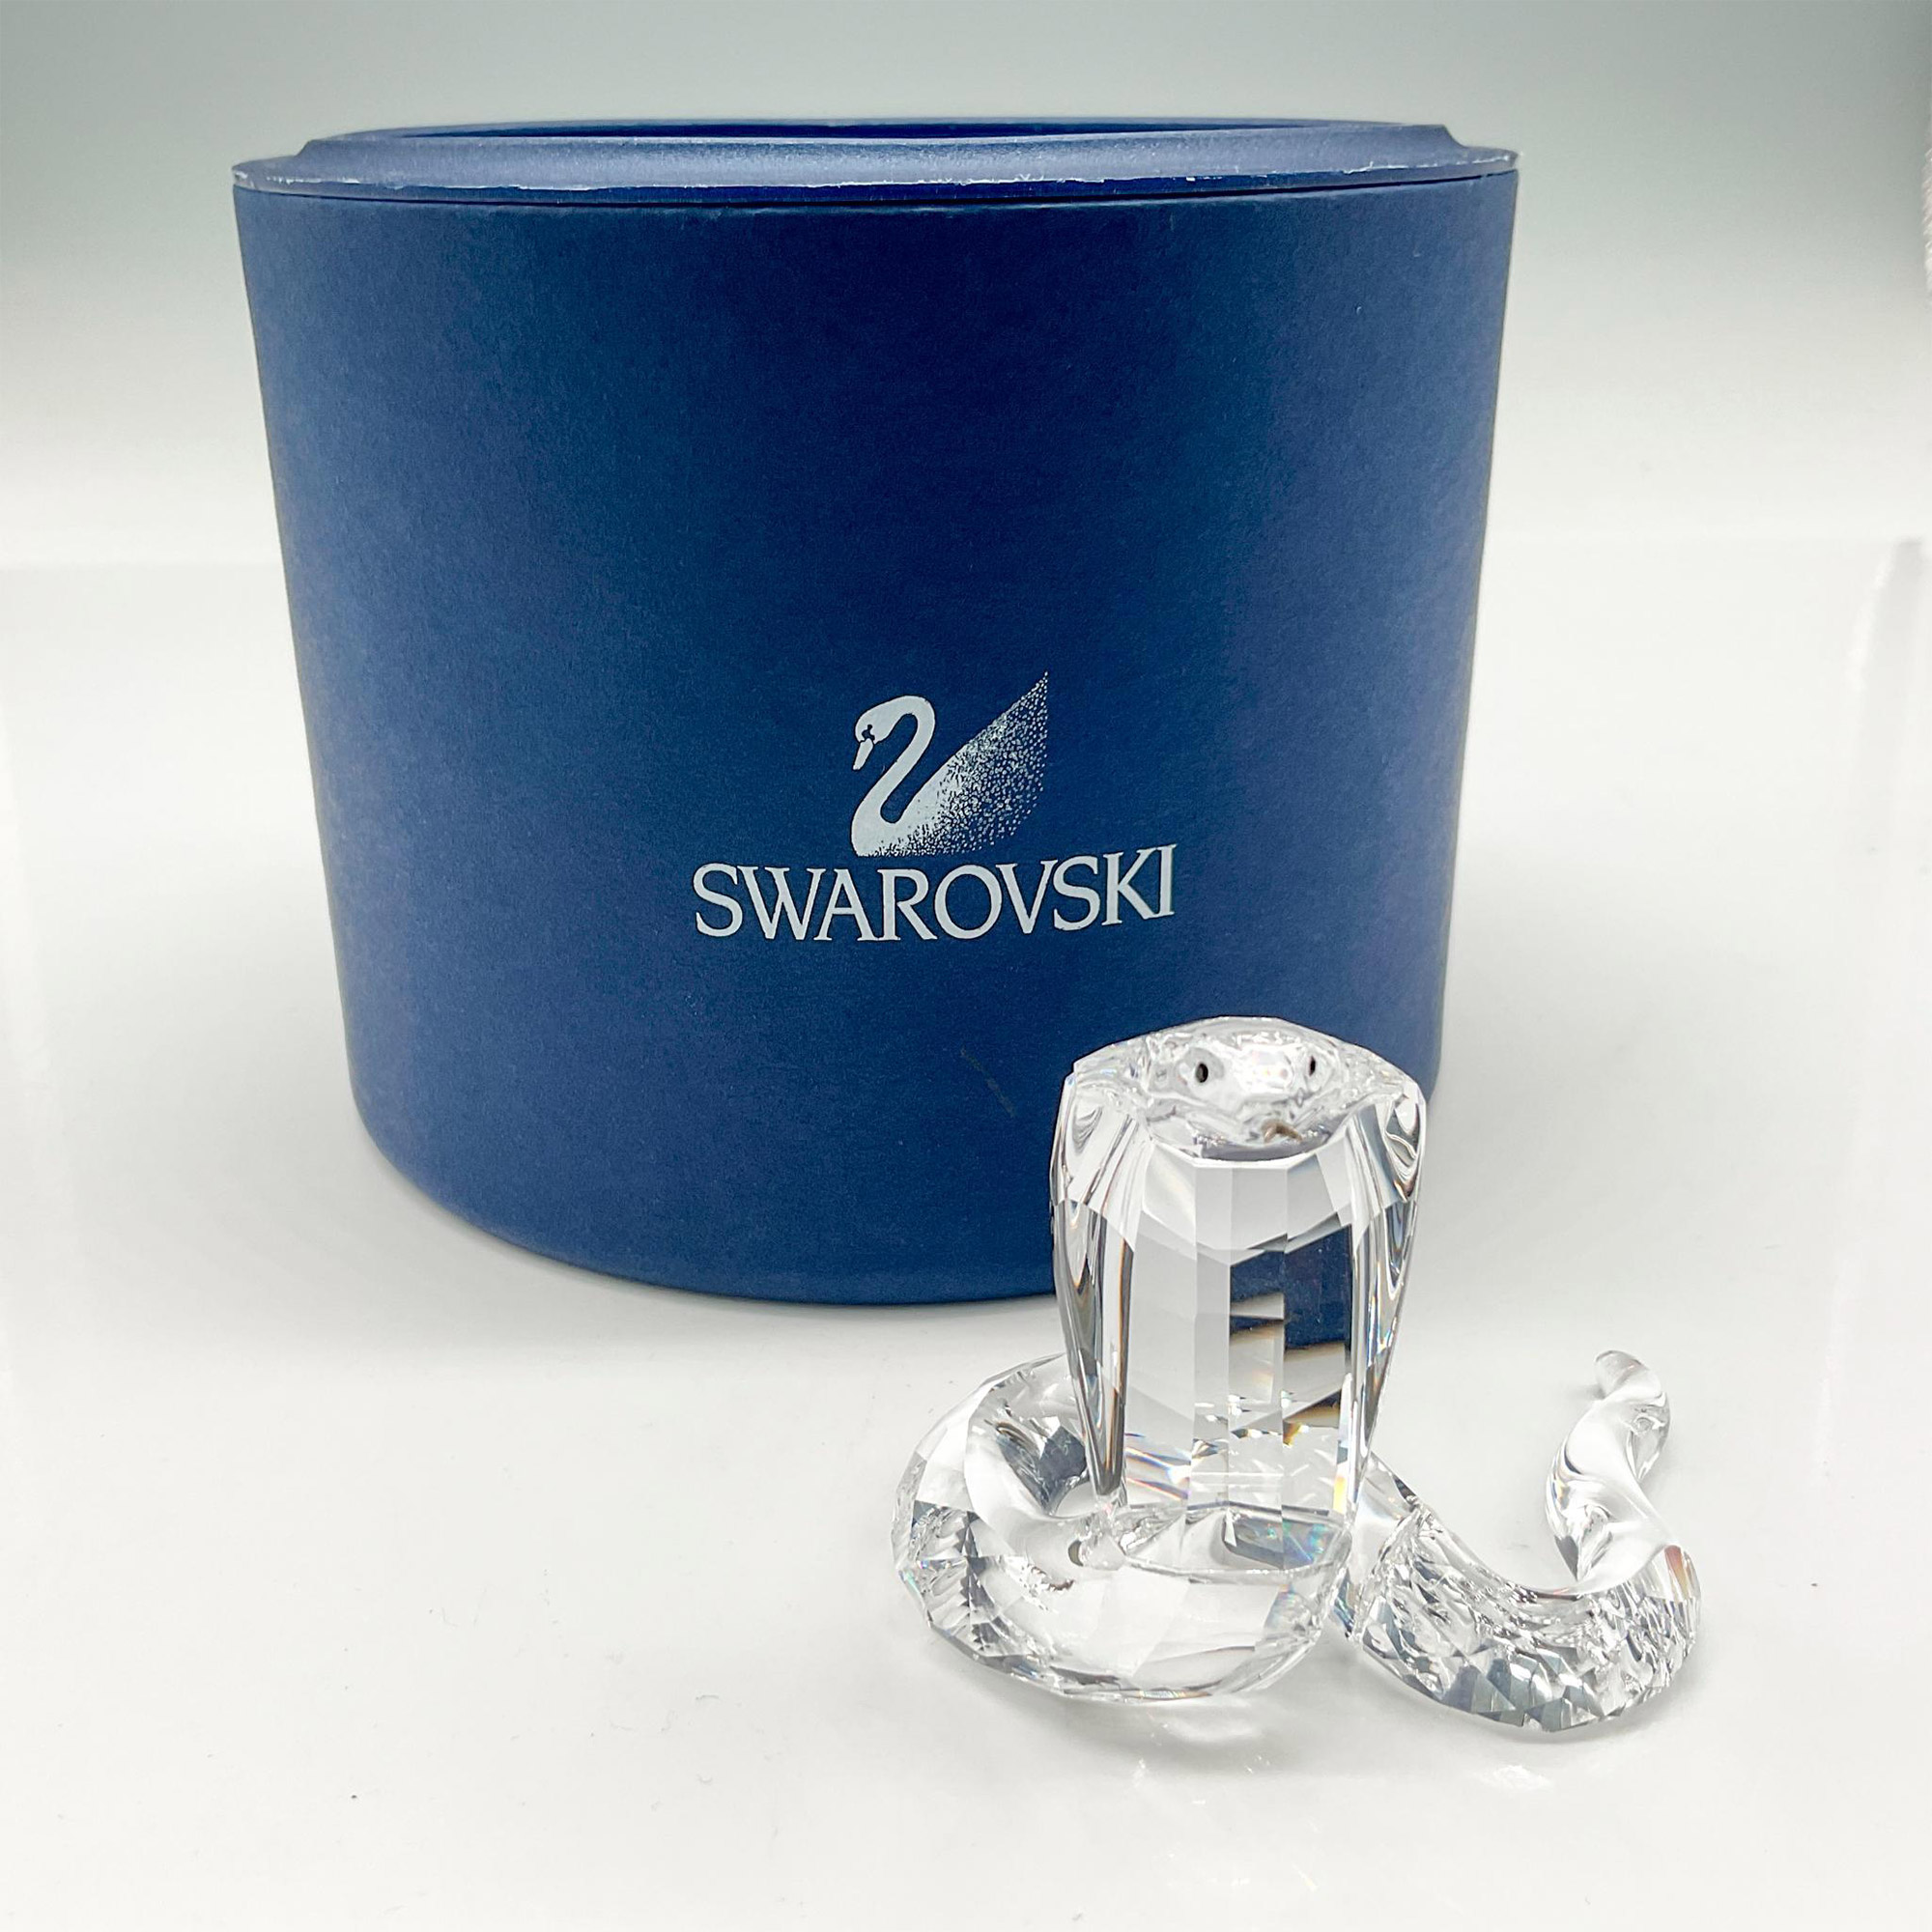 Swarovski Silver Crystal Figurine, Cobra - Image 4 of 4